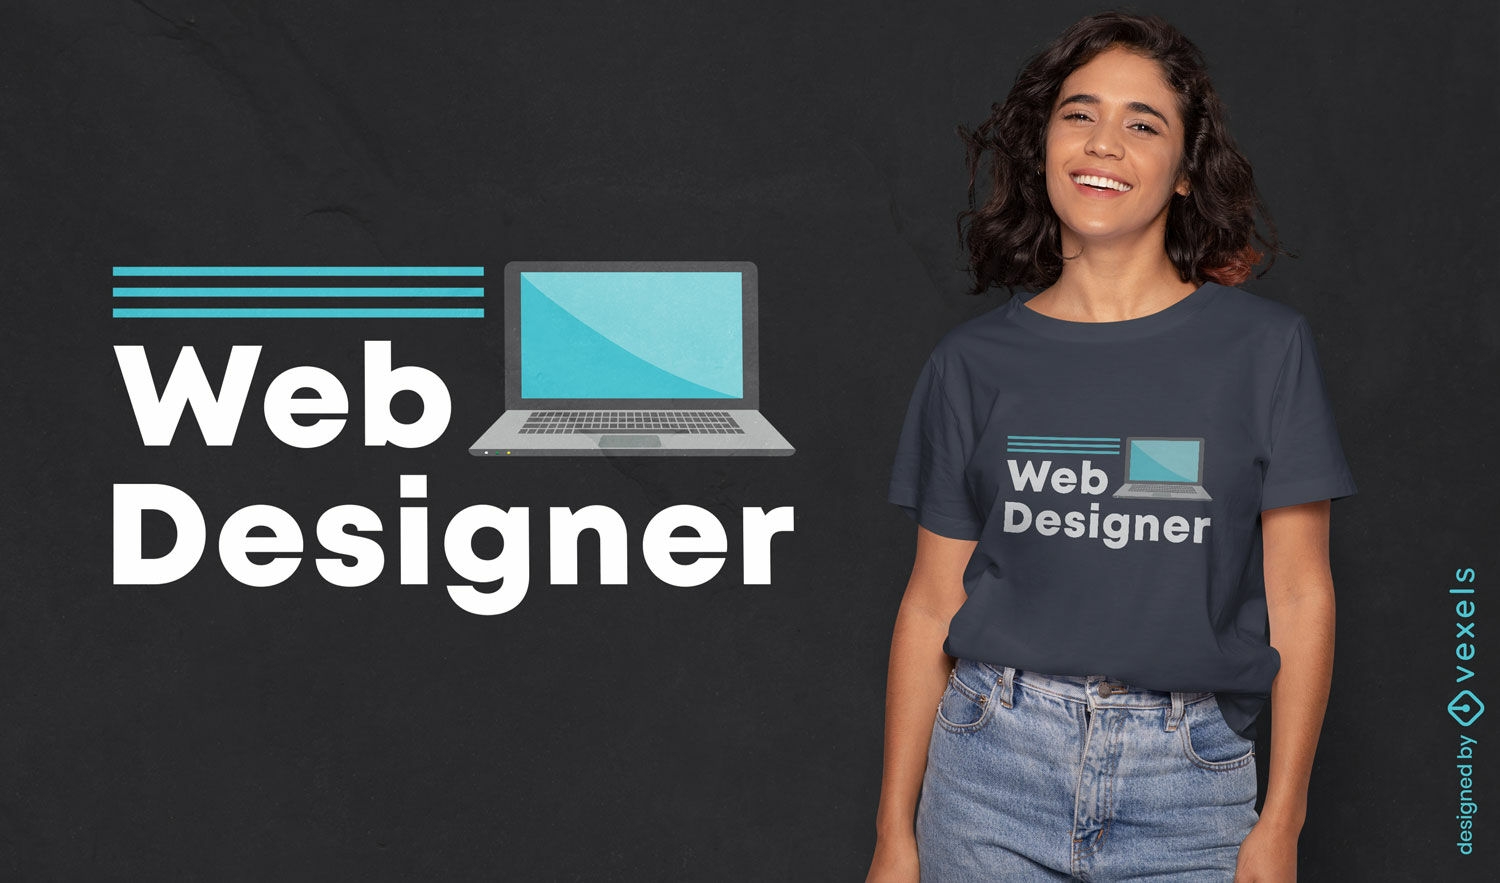 Web designer t-shirt design